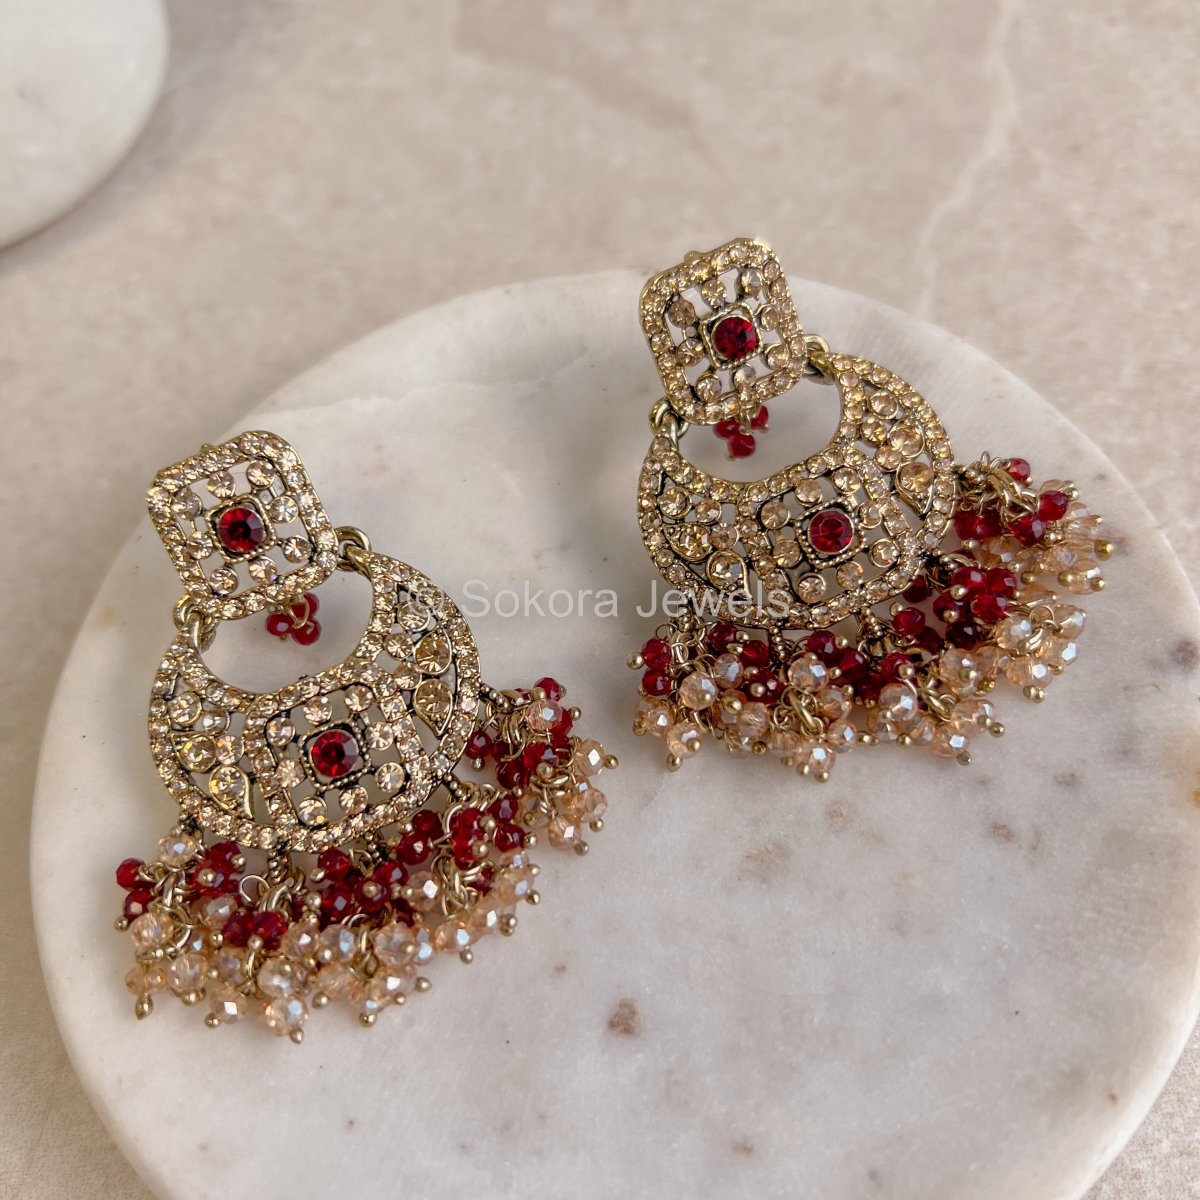 Qudsia Small Earrings - Maroon - SOKORA JEWELSQudsia Small Earrings - Maroon